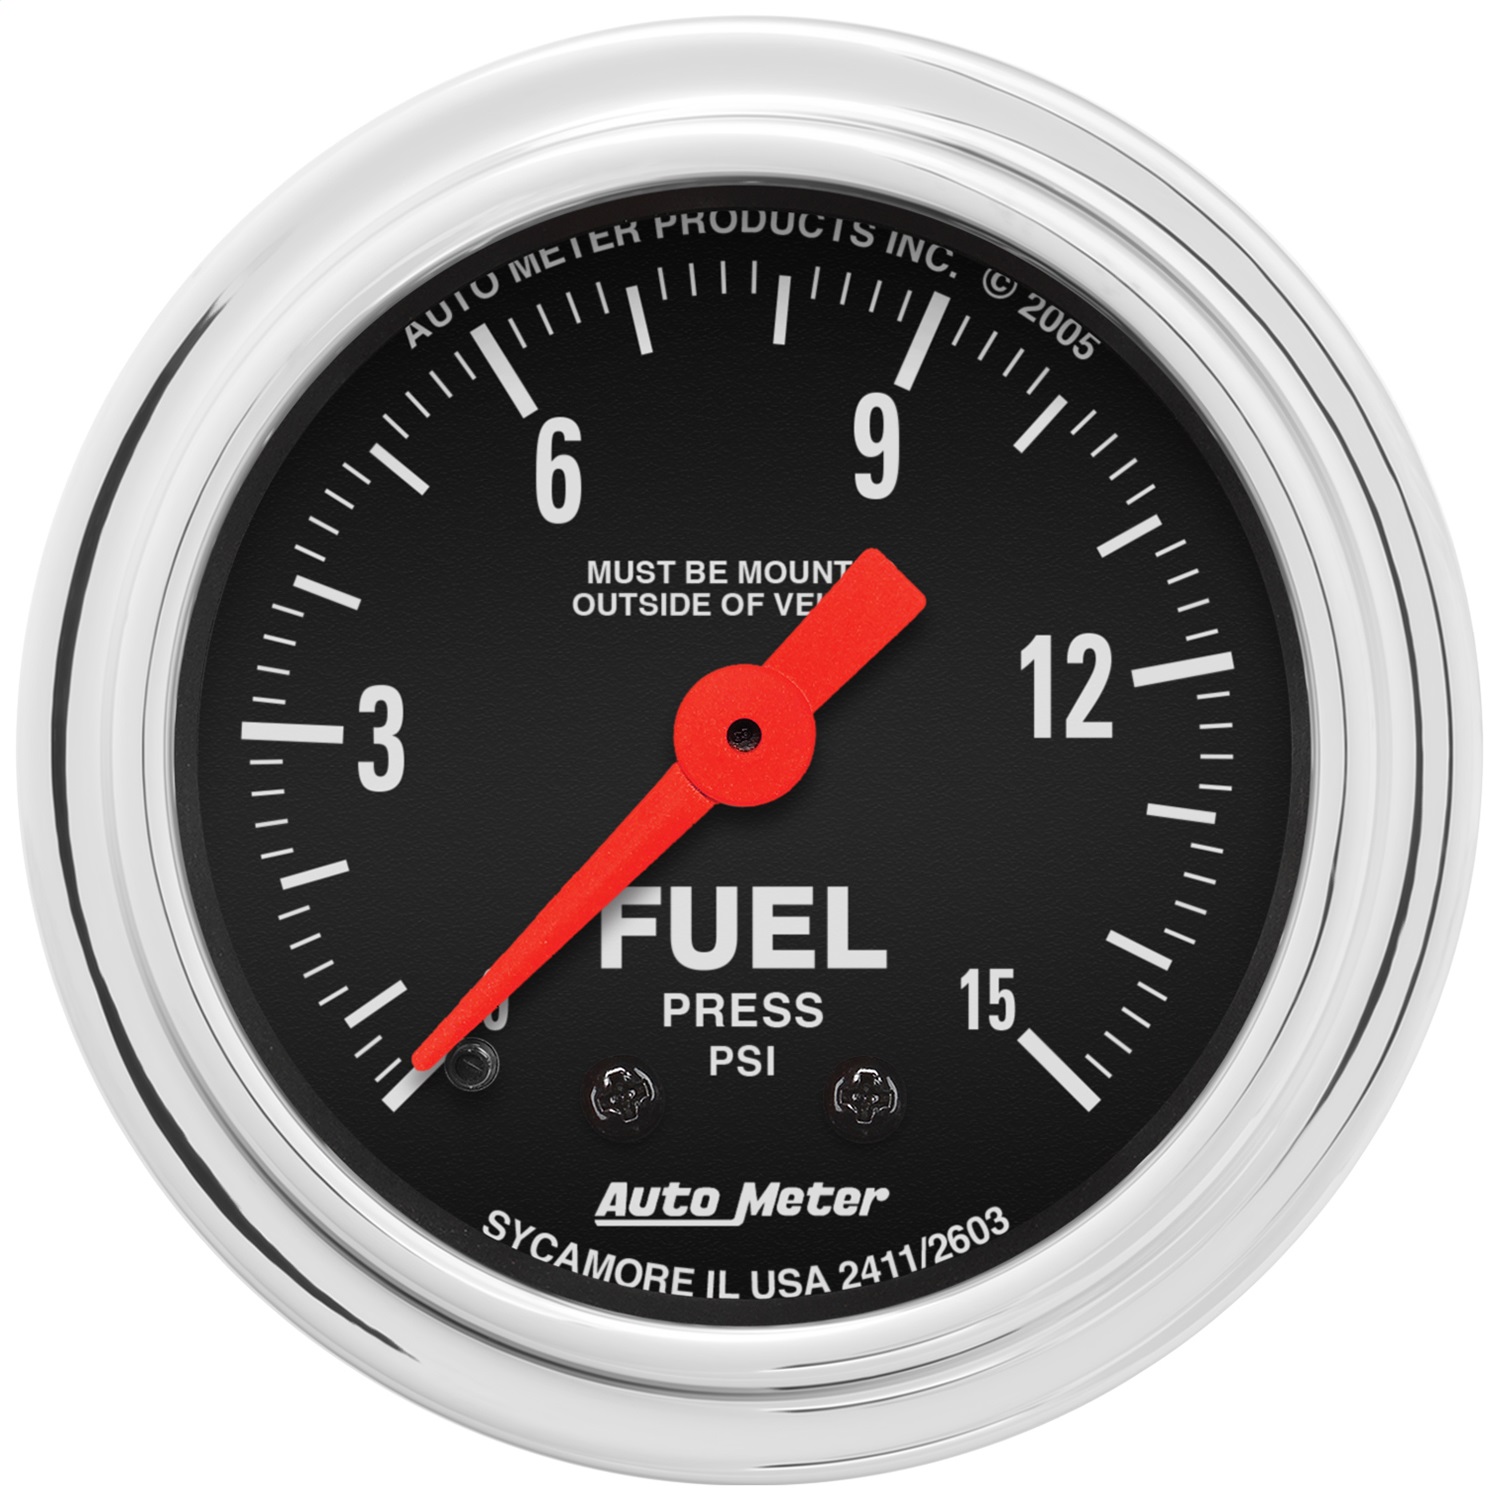 Auto Meter Auto Meter 2411 Traditional Chrome Mechanical Fuel Pressure Gauge